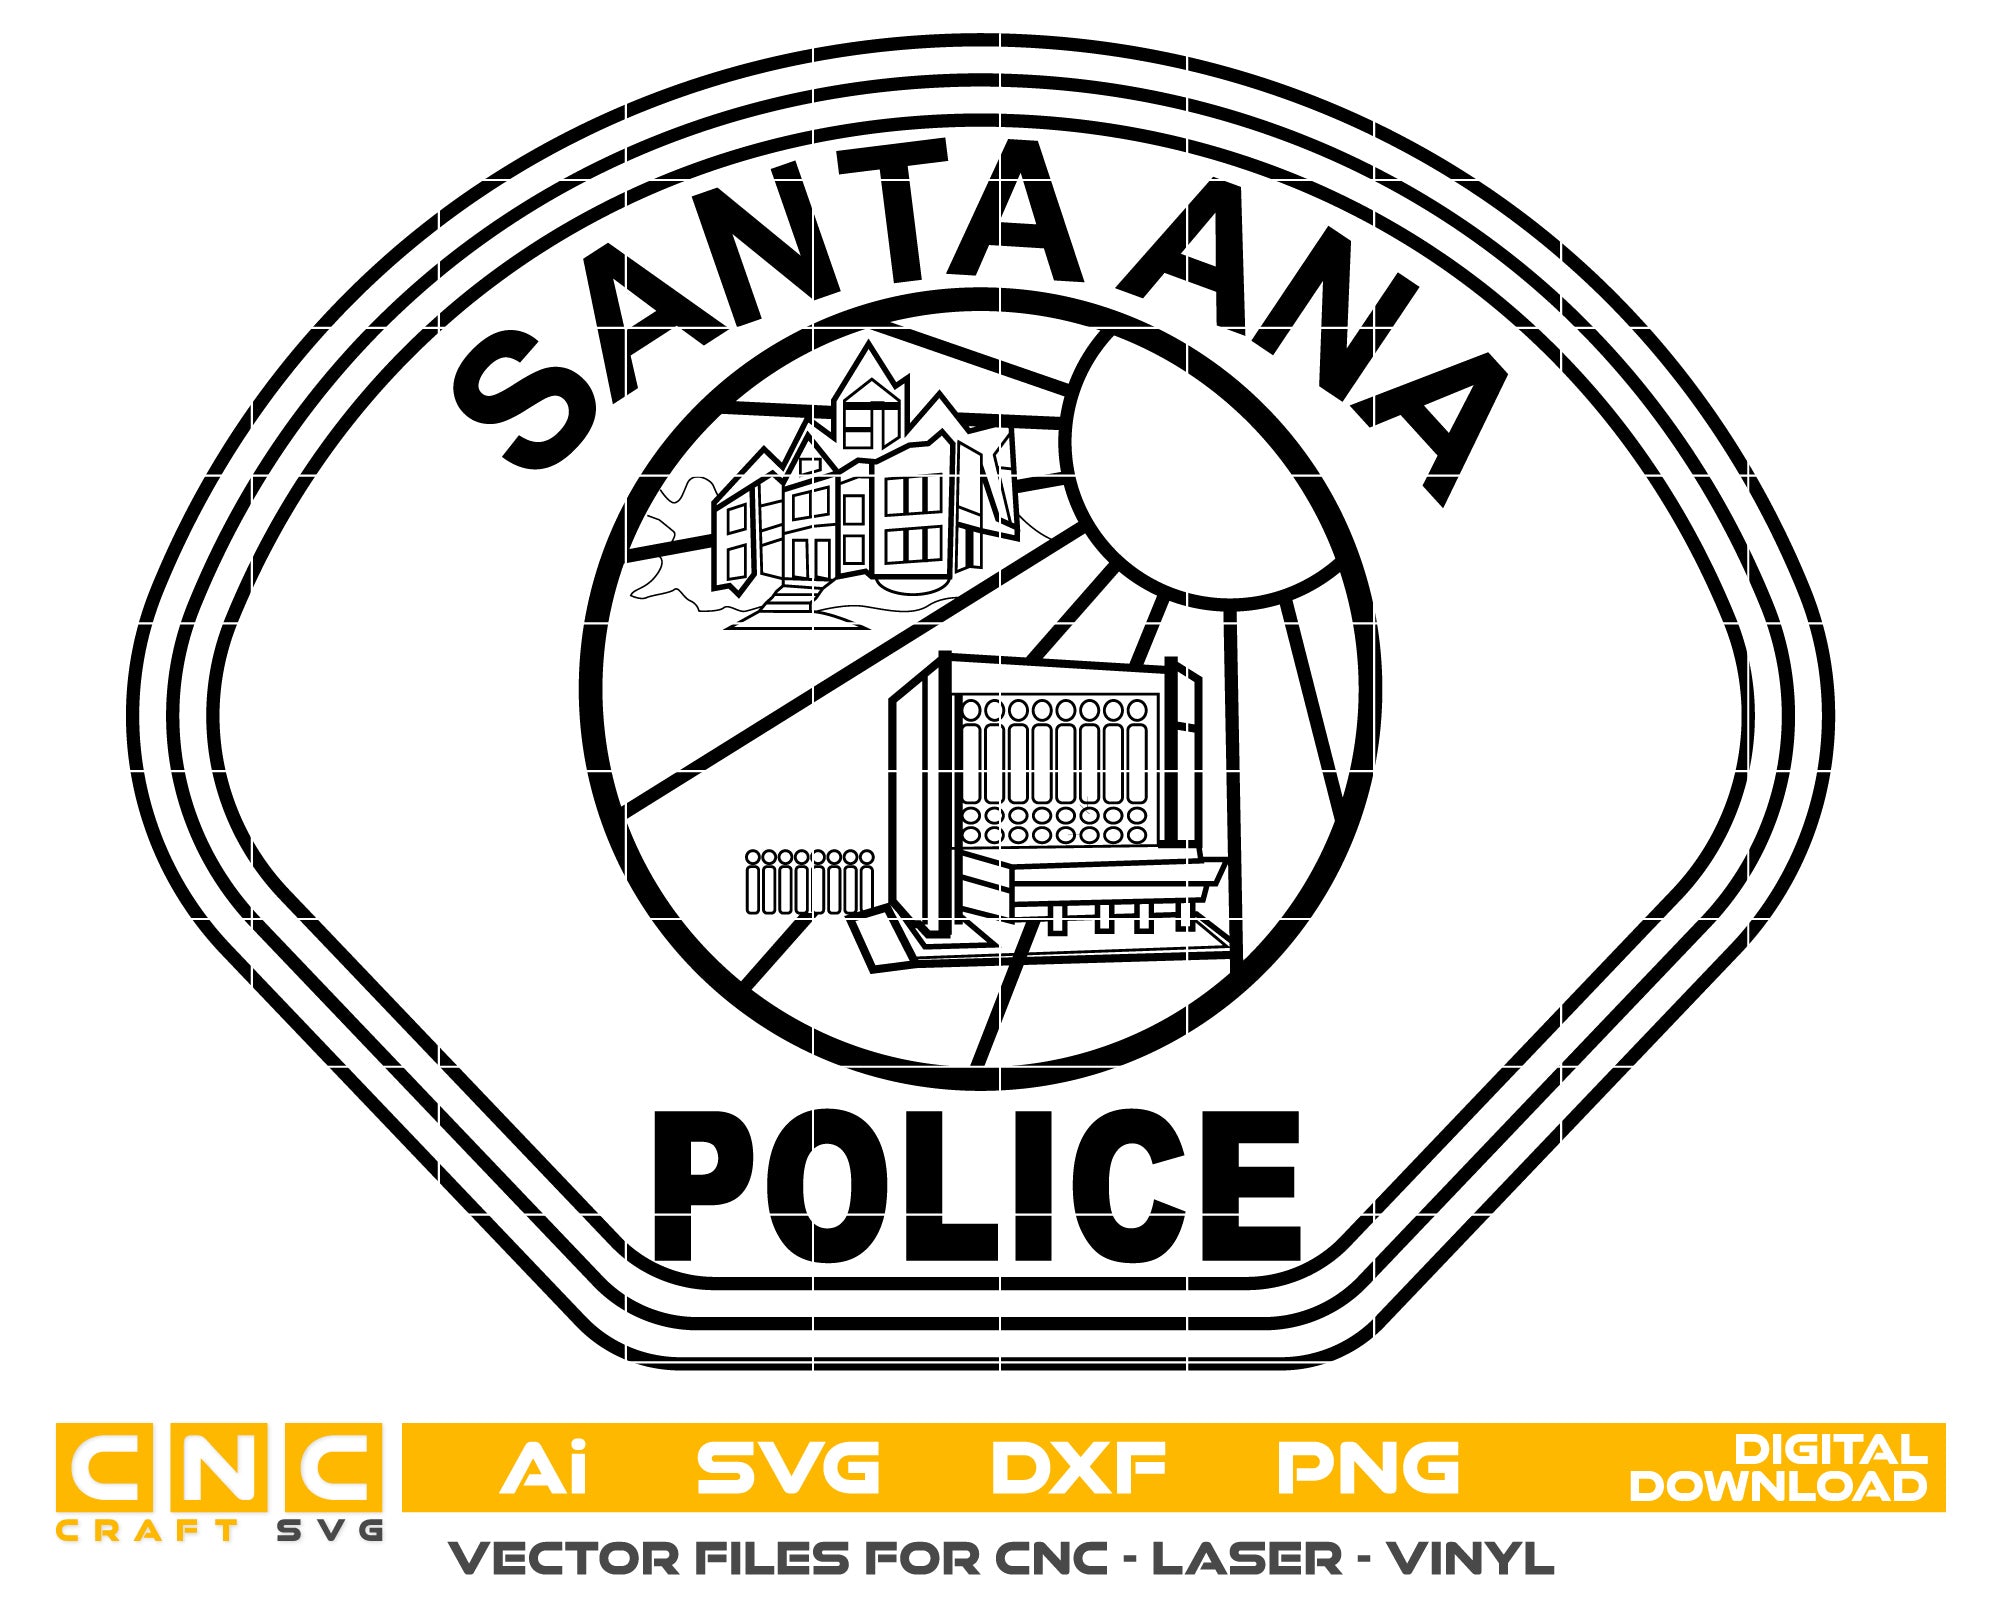 Santa Ana Police Badge vector art